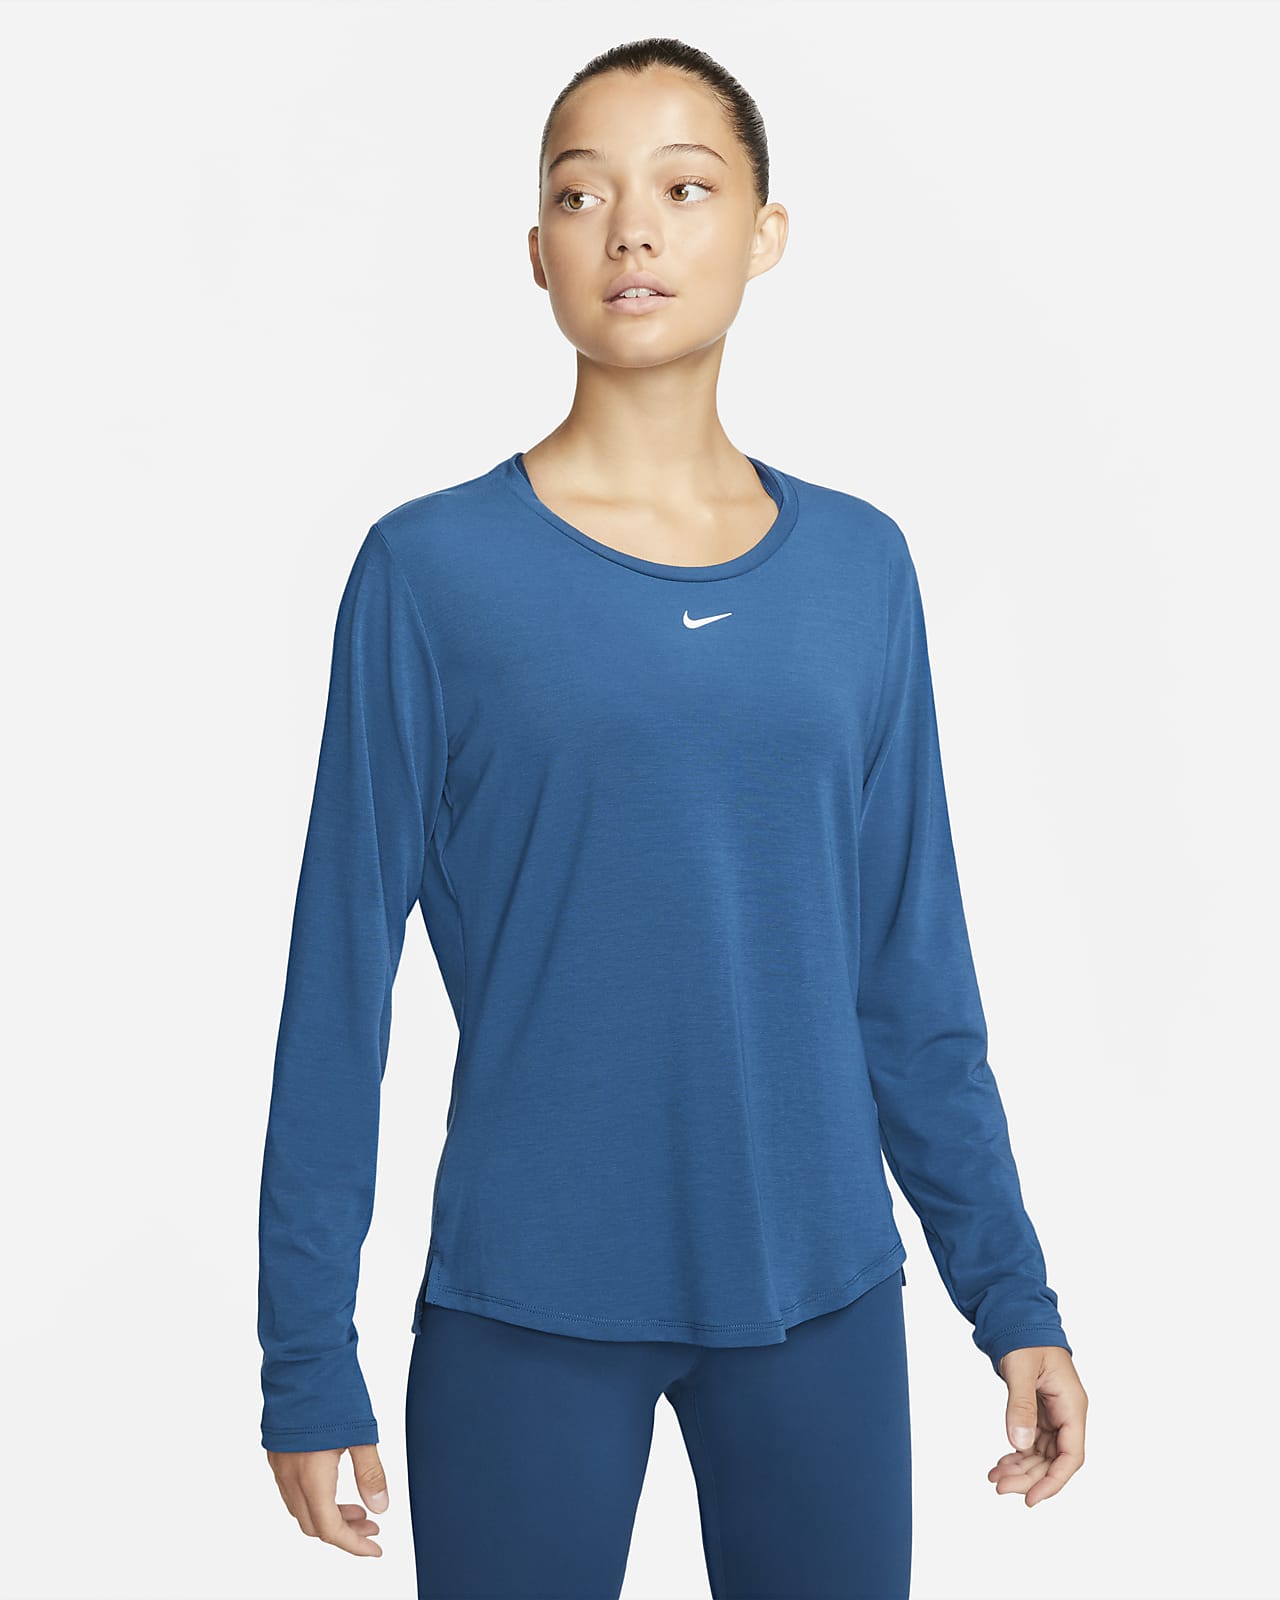 Nike Dri-FIT UV One Luxe Women's Standard Long-Sleeve Top. Nike.com